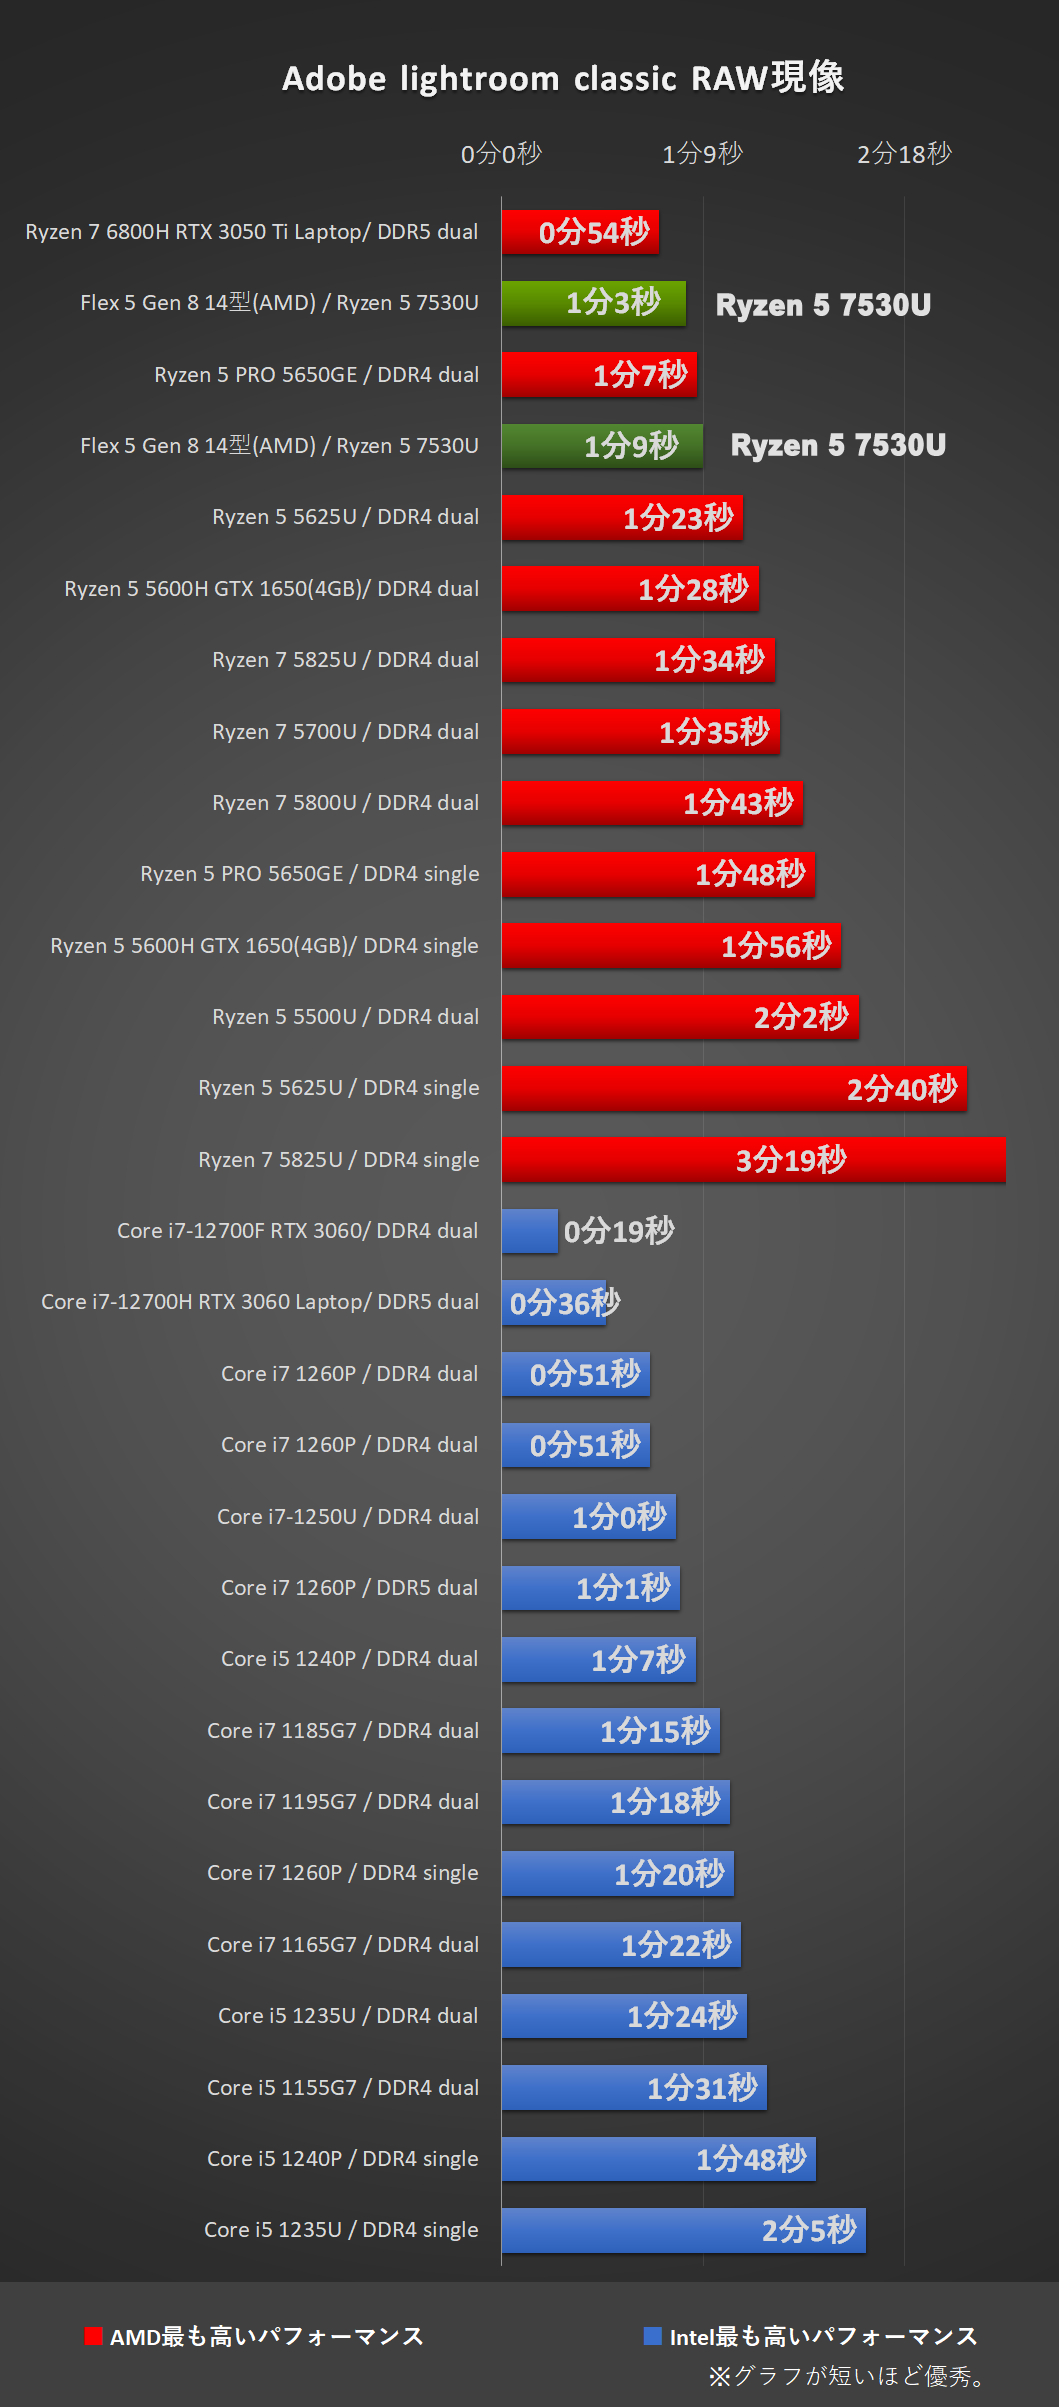 「Flex 5 Gen 8 14型(AMD)」Ryzen 5 7530Uにて、Adobe-Lightroom classic 処理時間比較